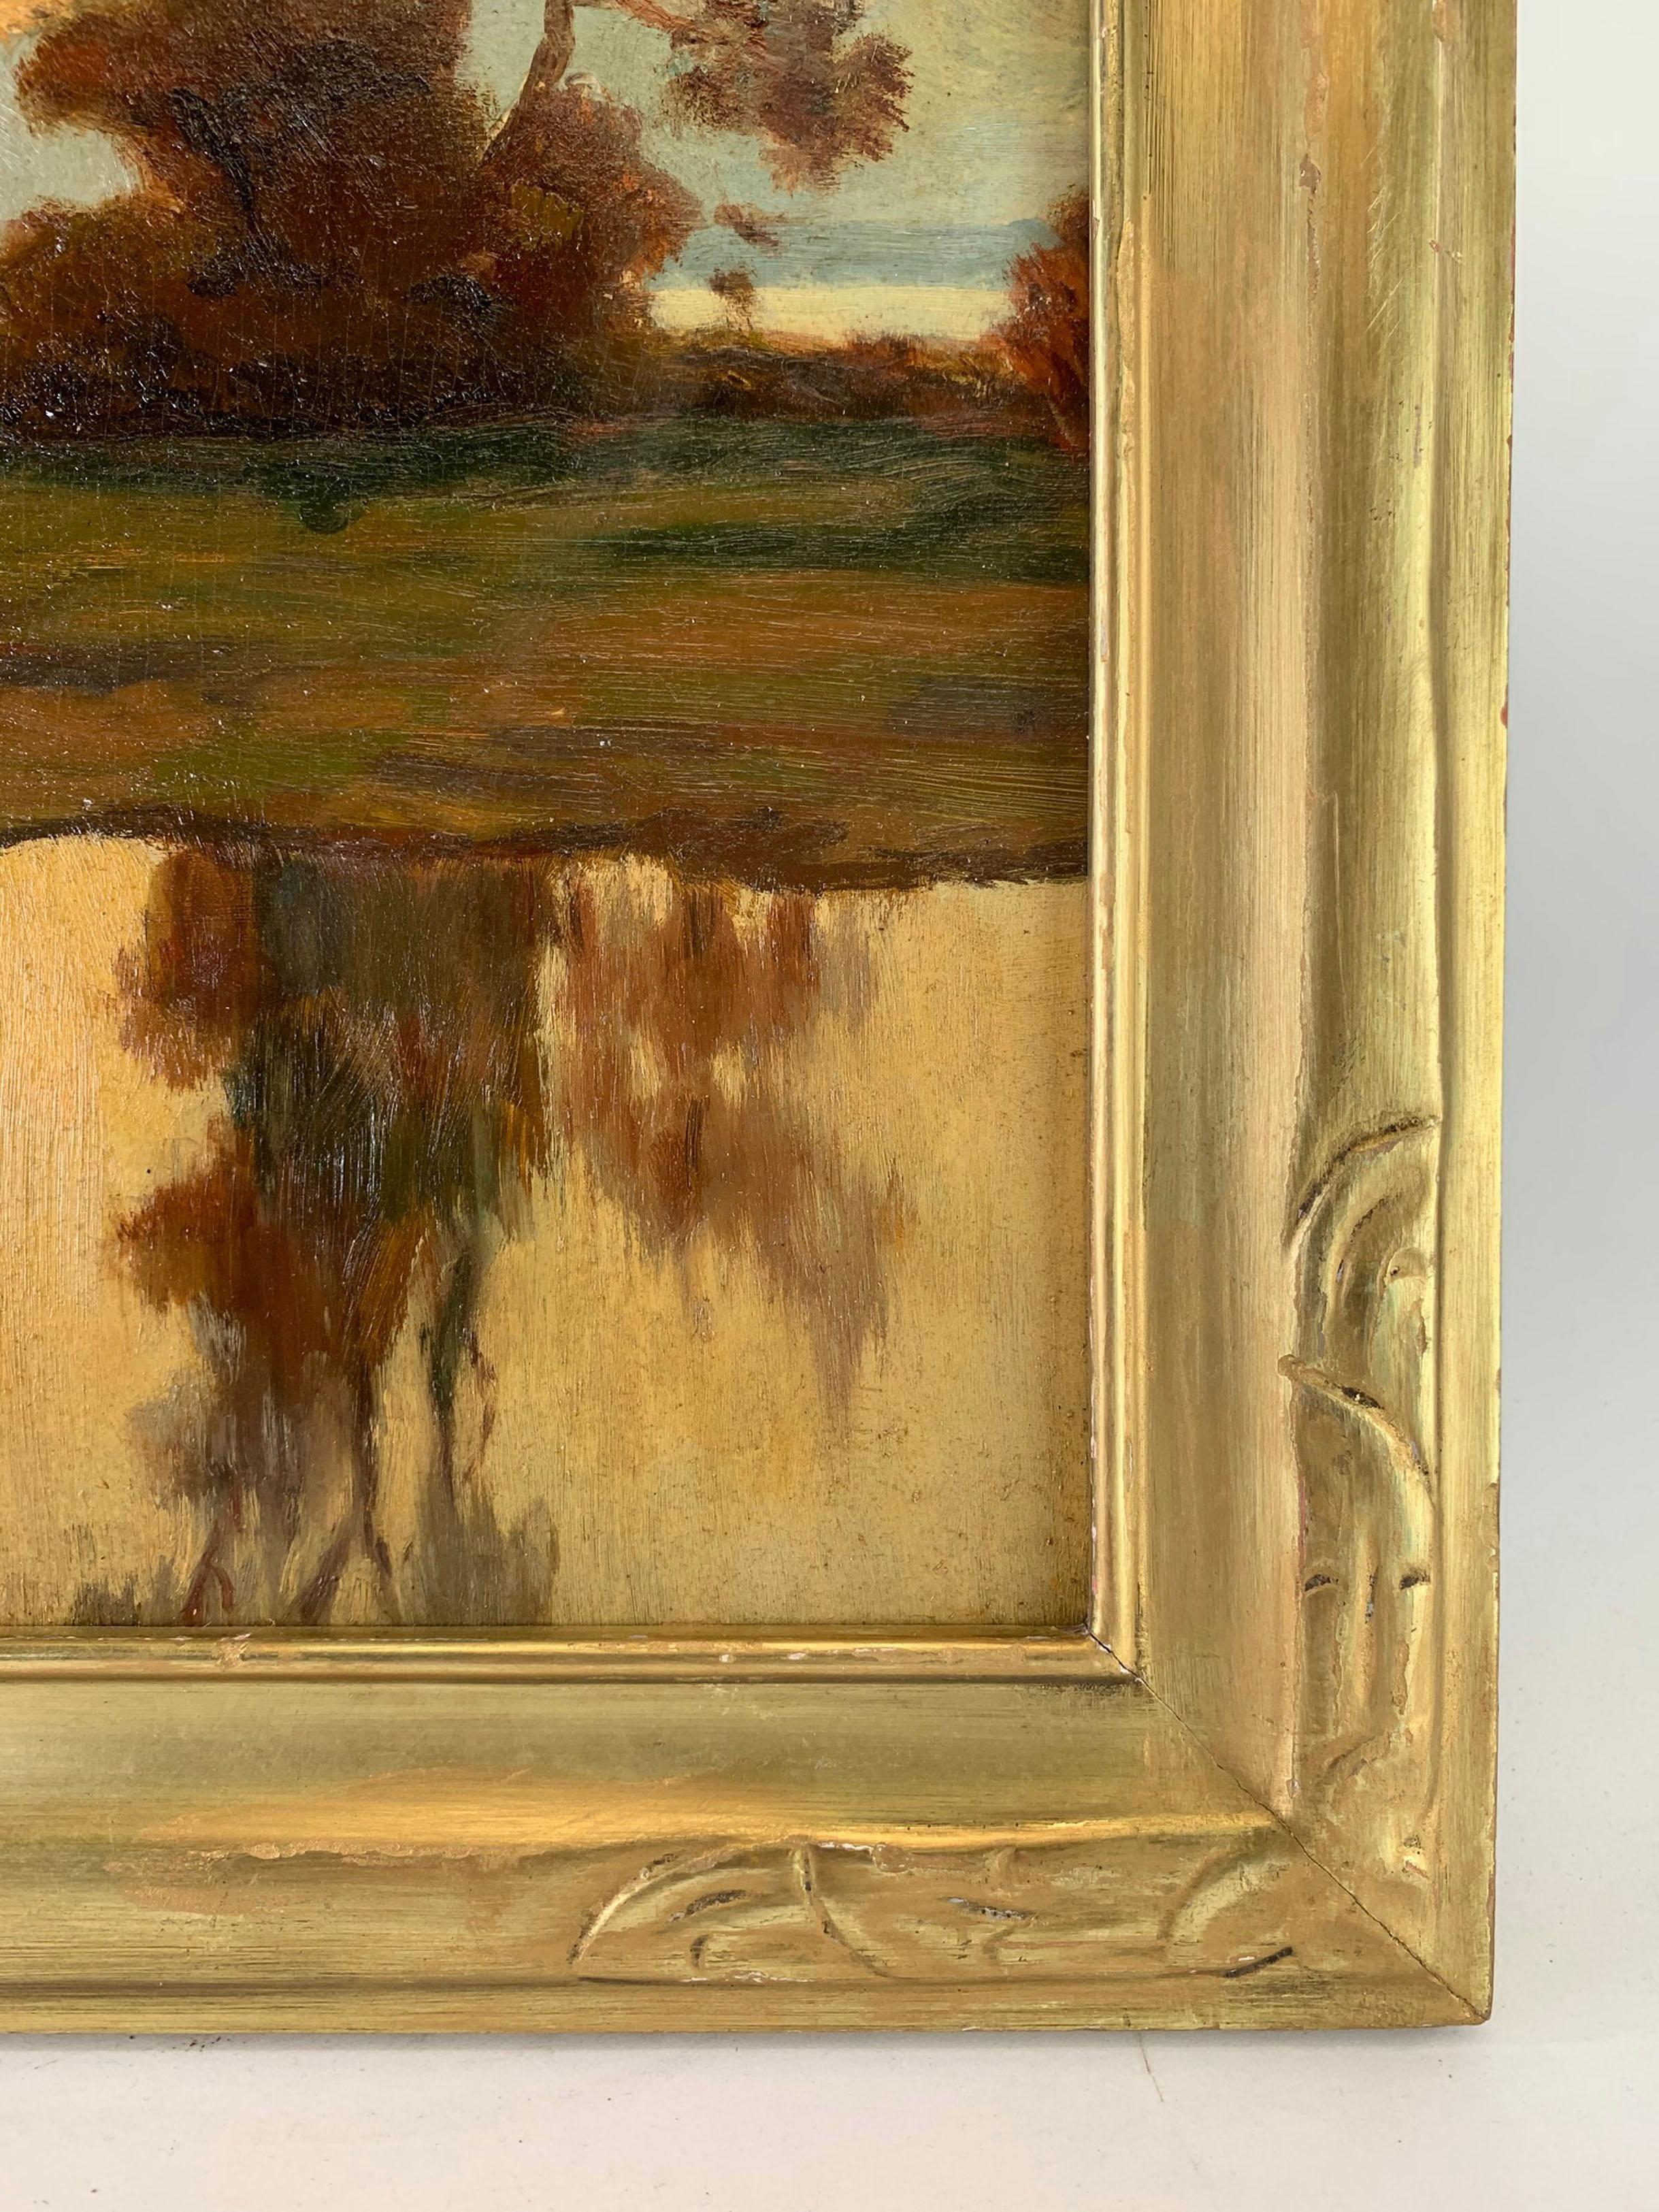 Paint 19th Century American Impressionist Oil Landscape Signed R. Lewis